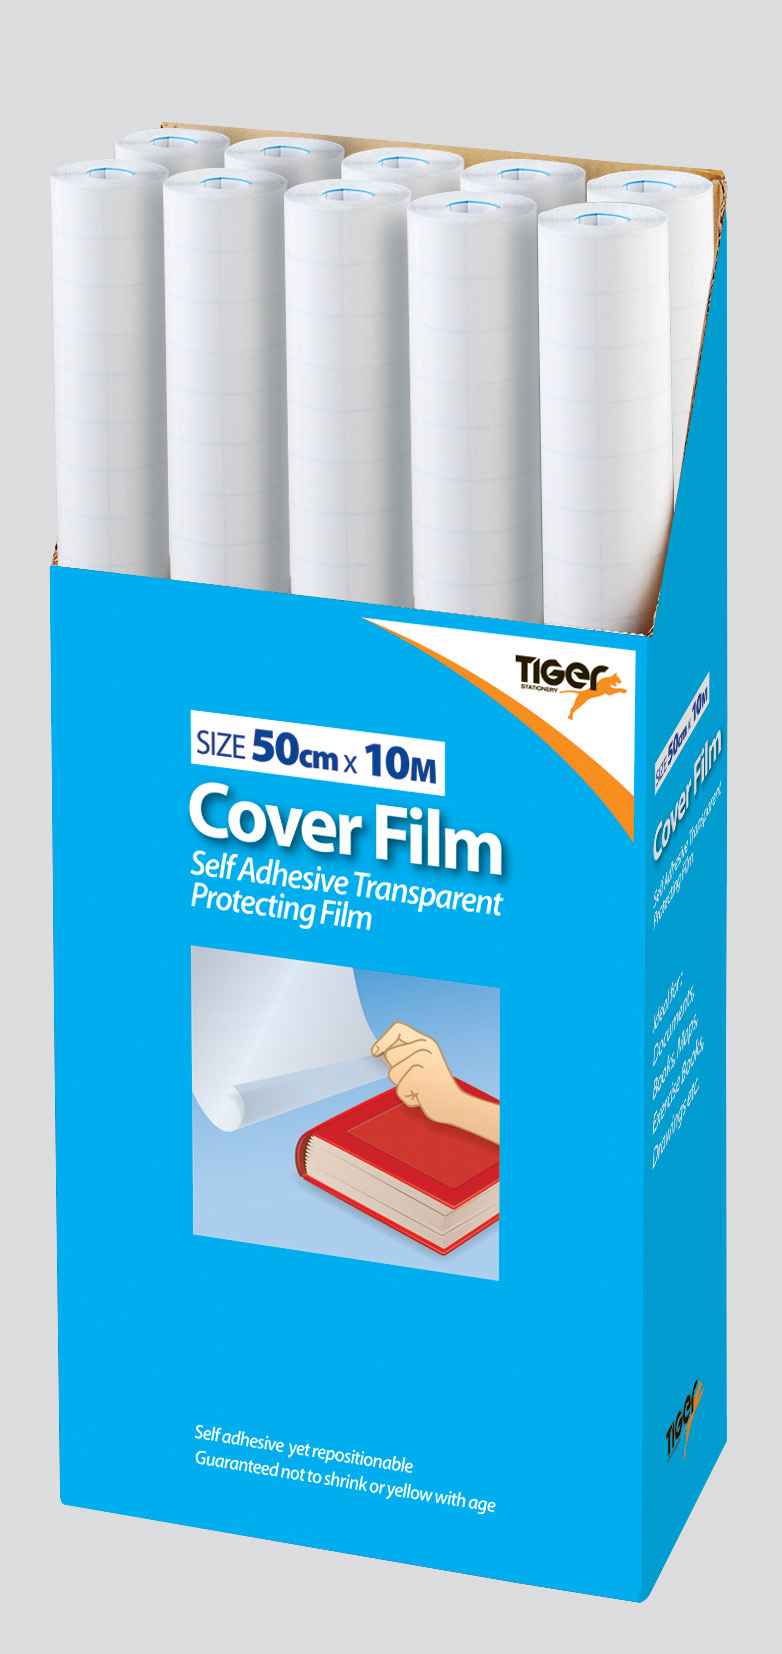 Tiger 50cm x 10M Book Coverfilm Self Adhesive Transparent Protecting Film